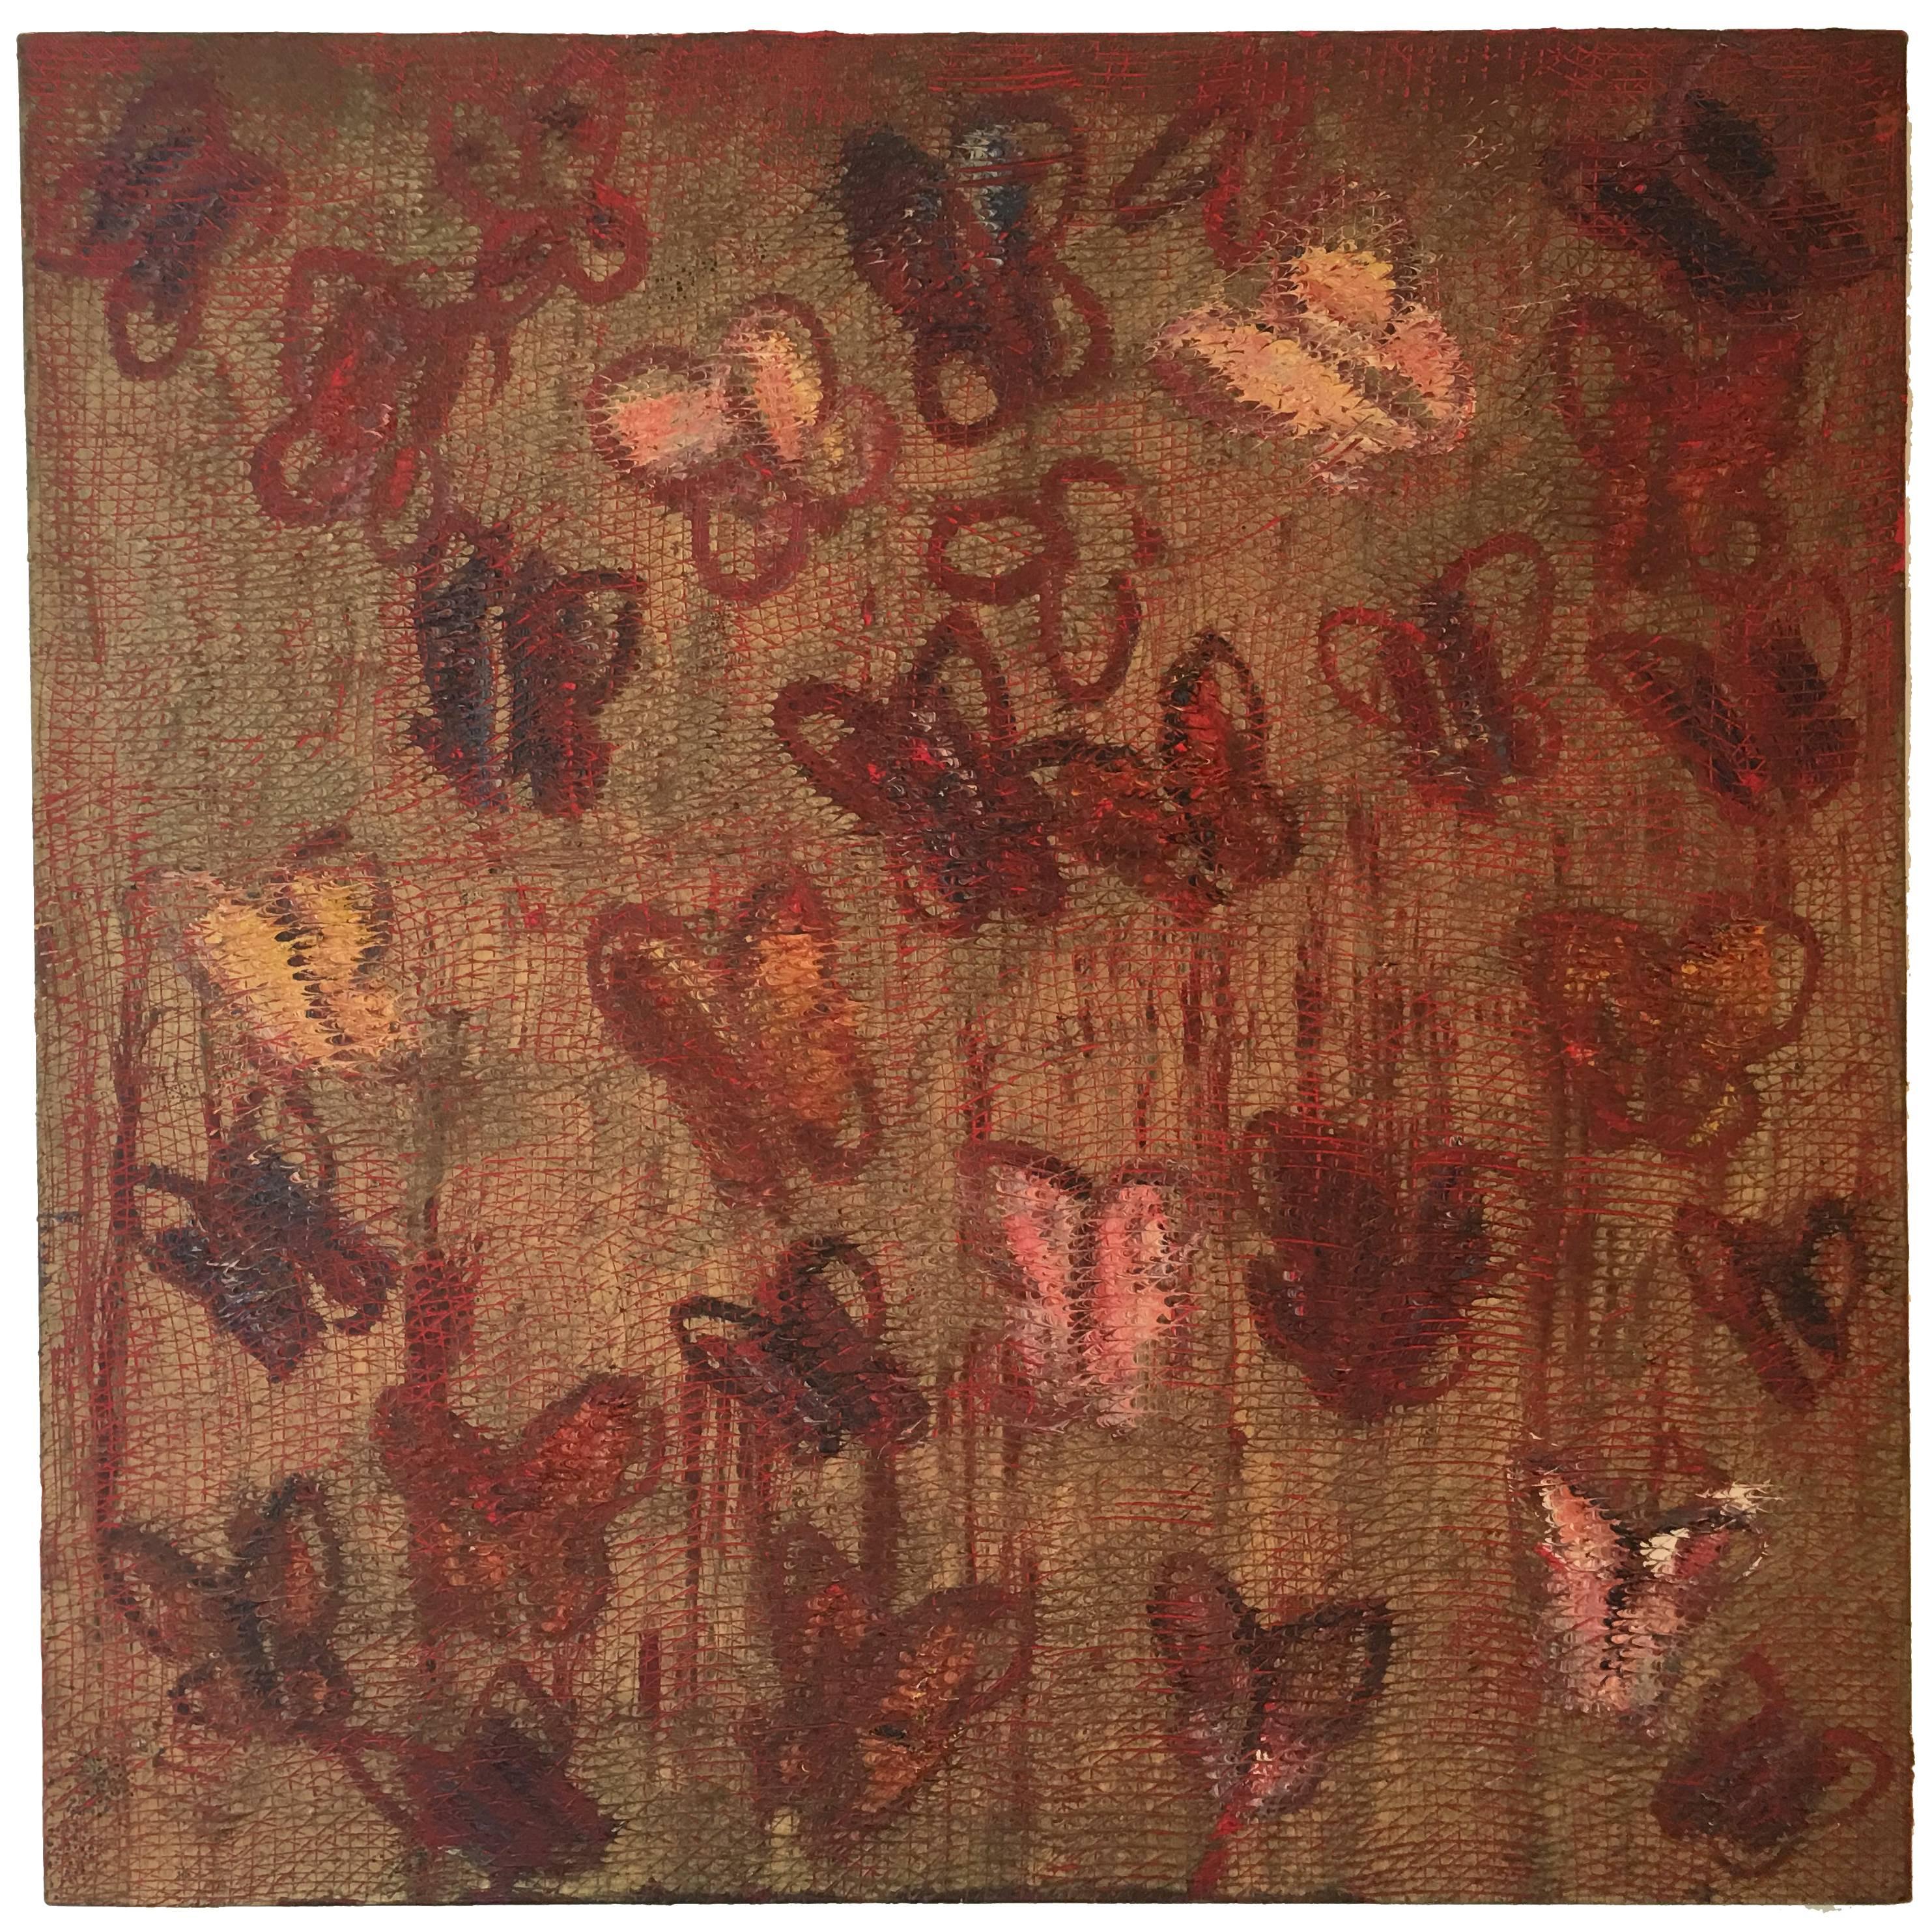 "Red Butterflies" by Hunt Slonem